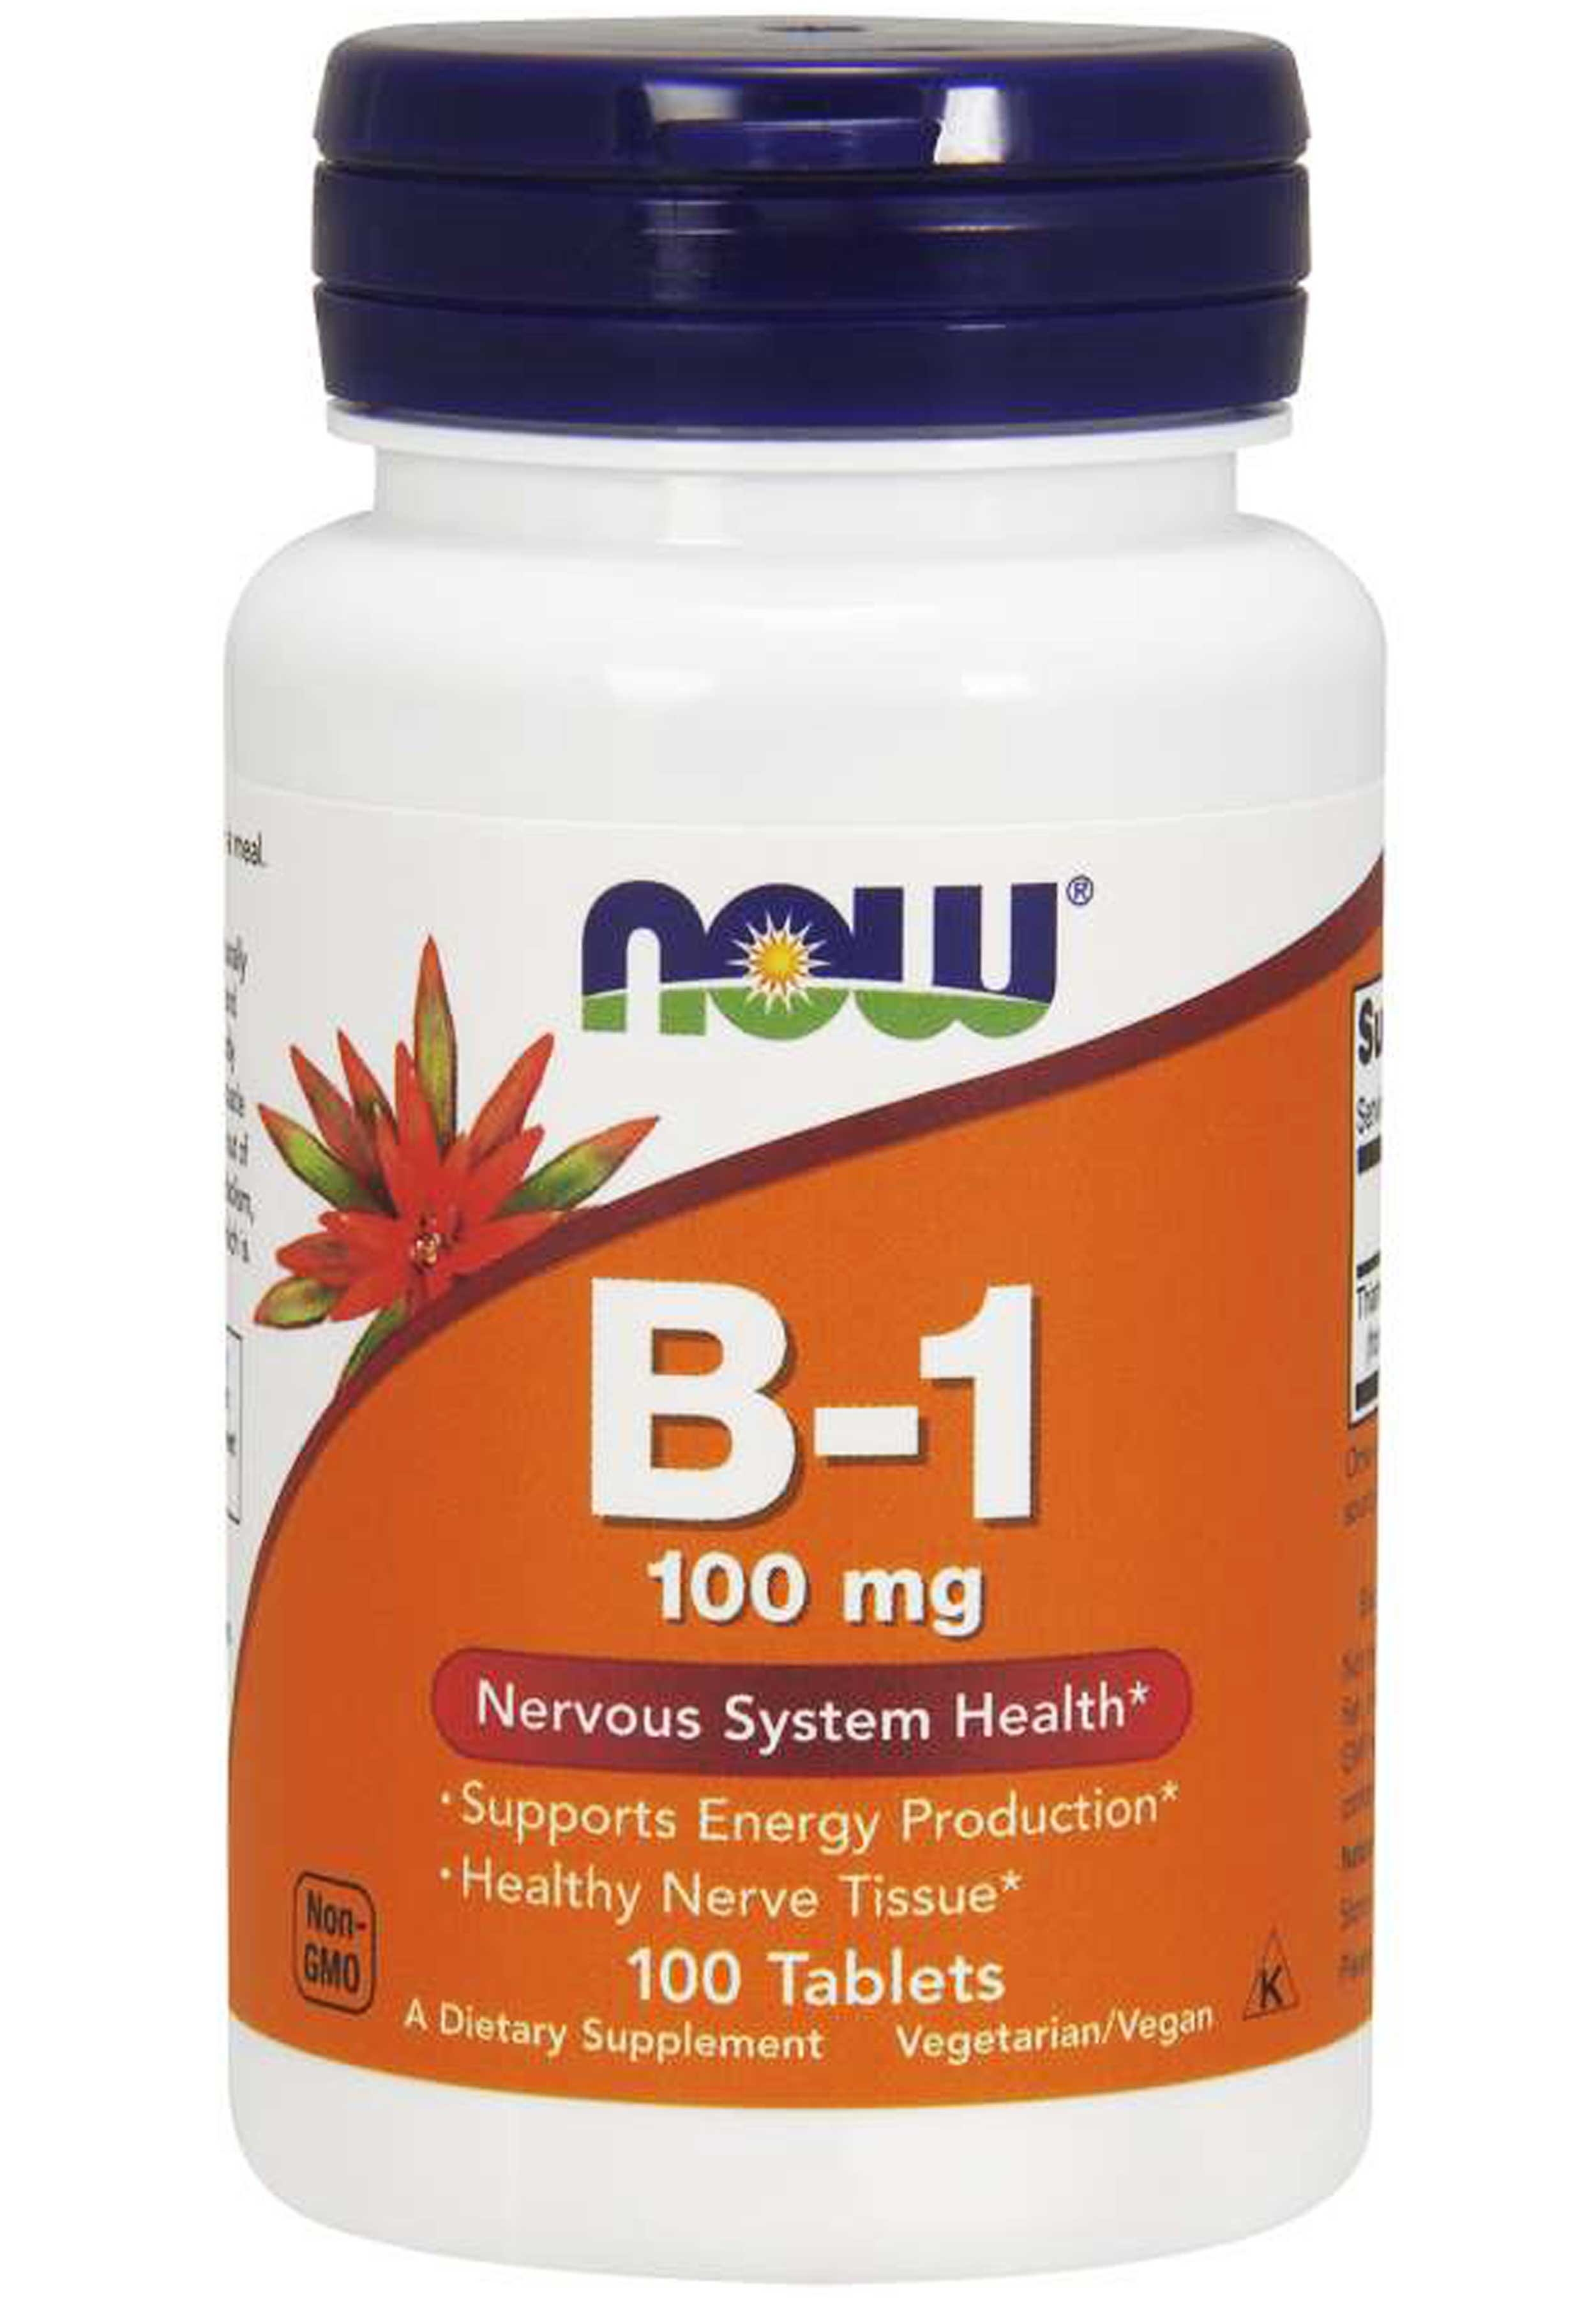 NOW B-1 100 mg